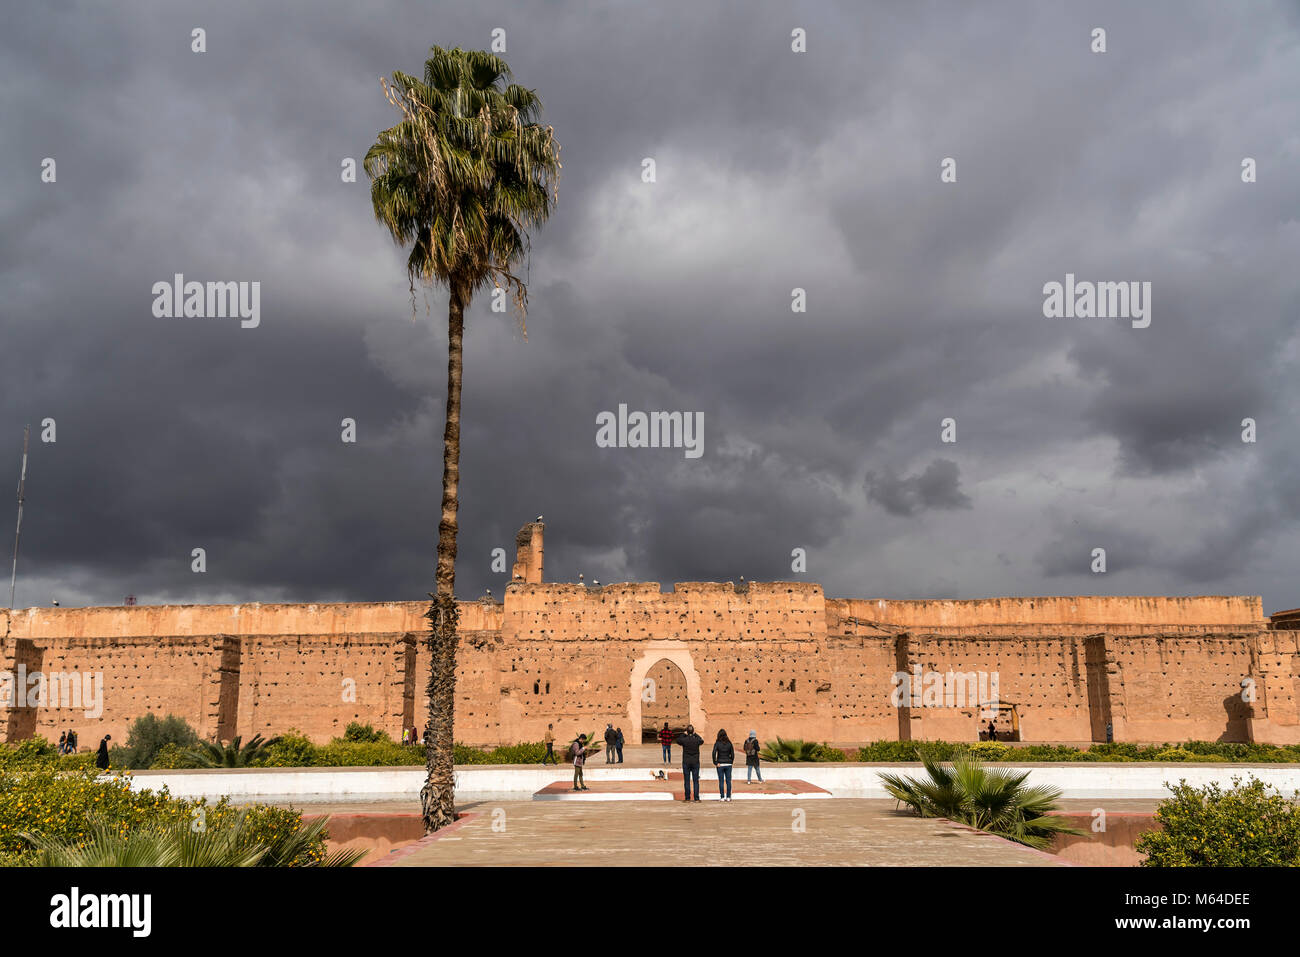 Ruinen des Palais El Badi, Marrakech, Königreich Marokko, Afrika | Palais El Badi ruines, Marrakech, Royaume du Maroc, l'Afrique Banque D'Images